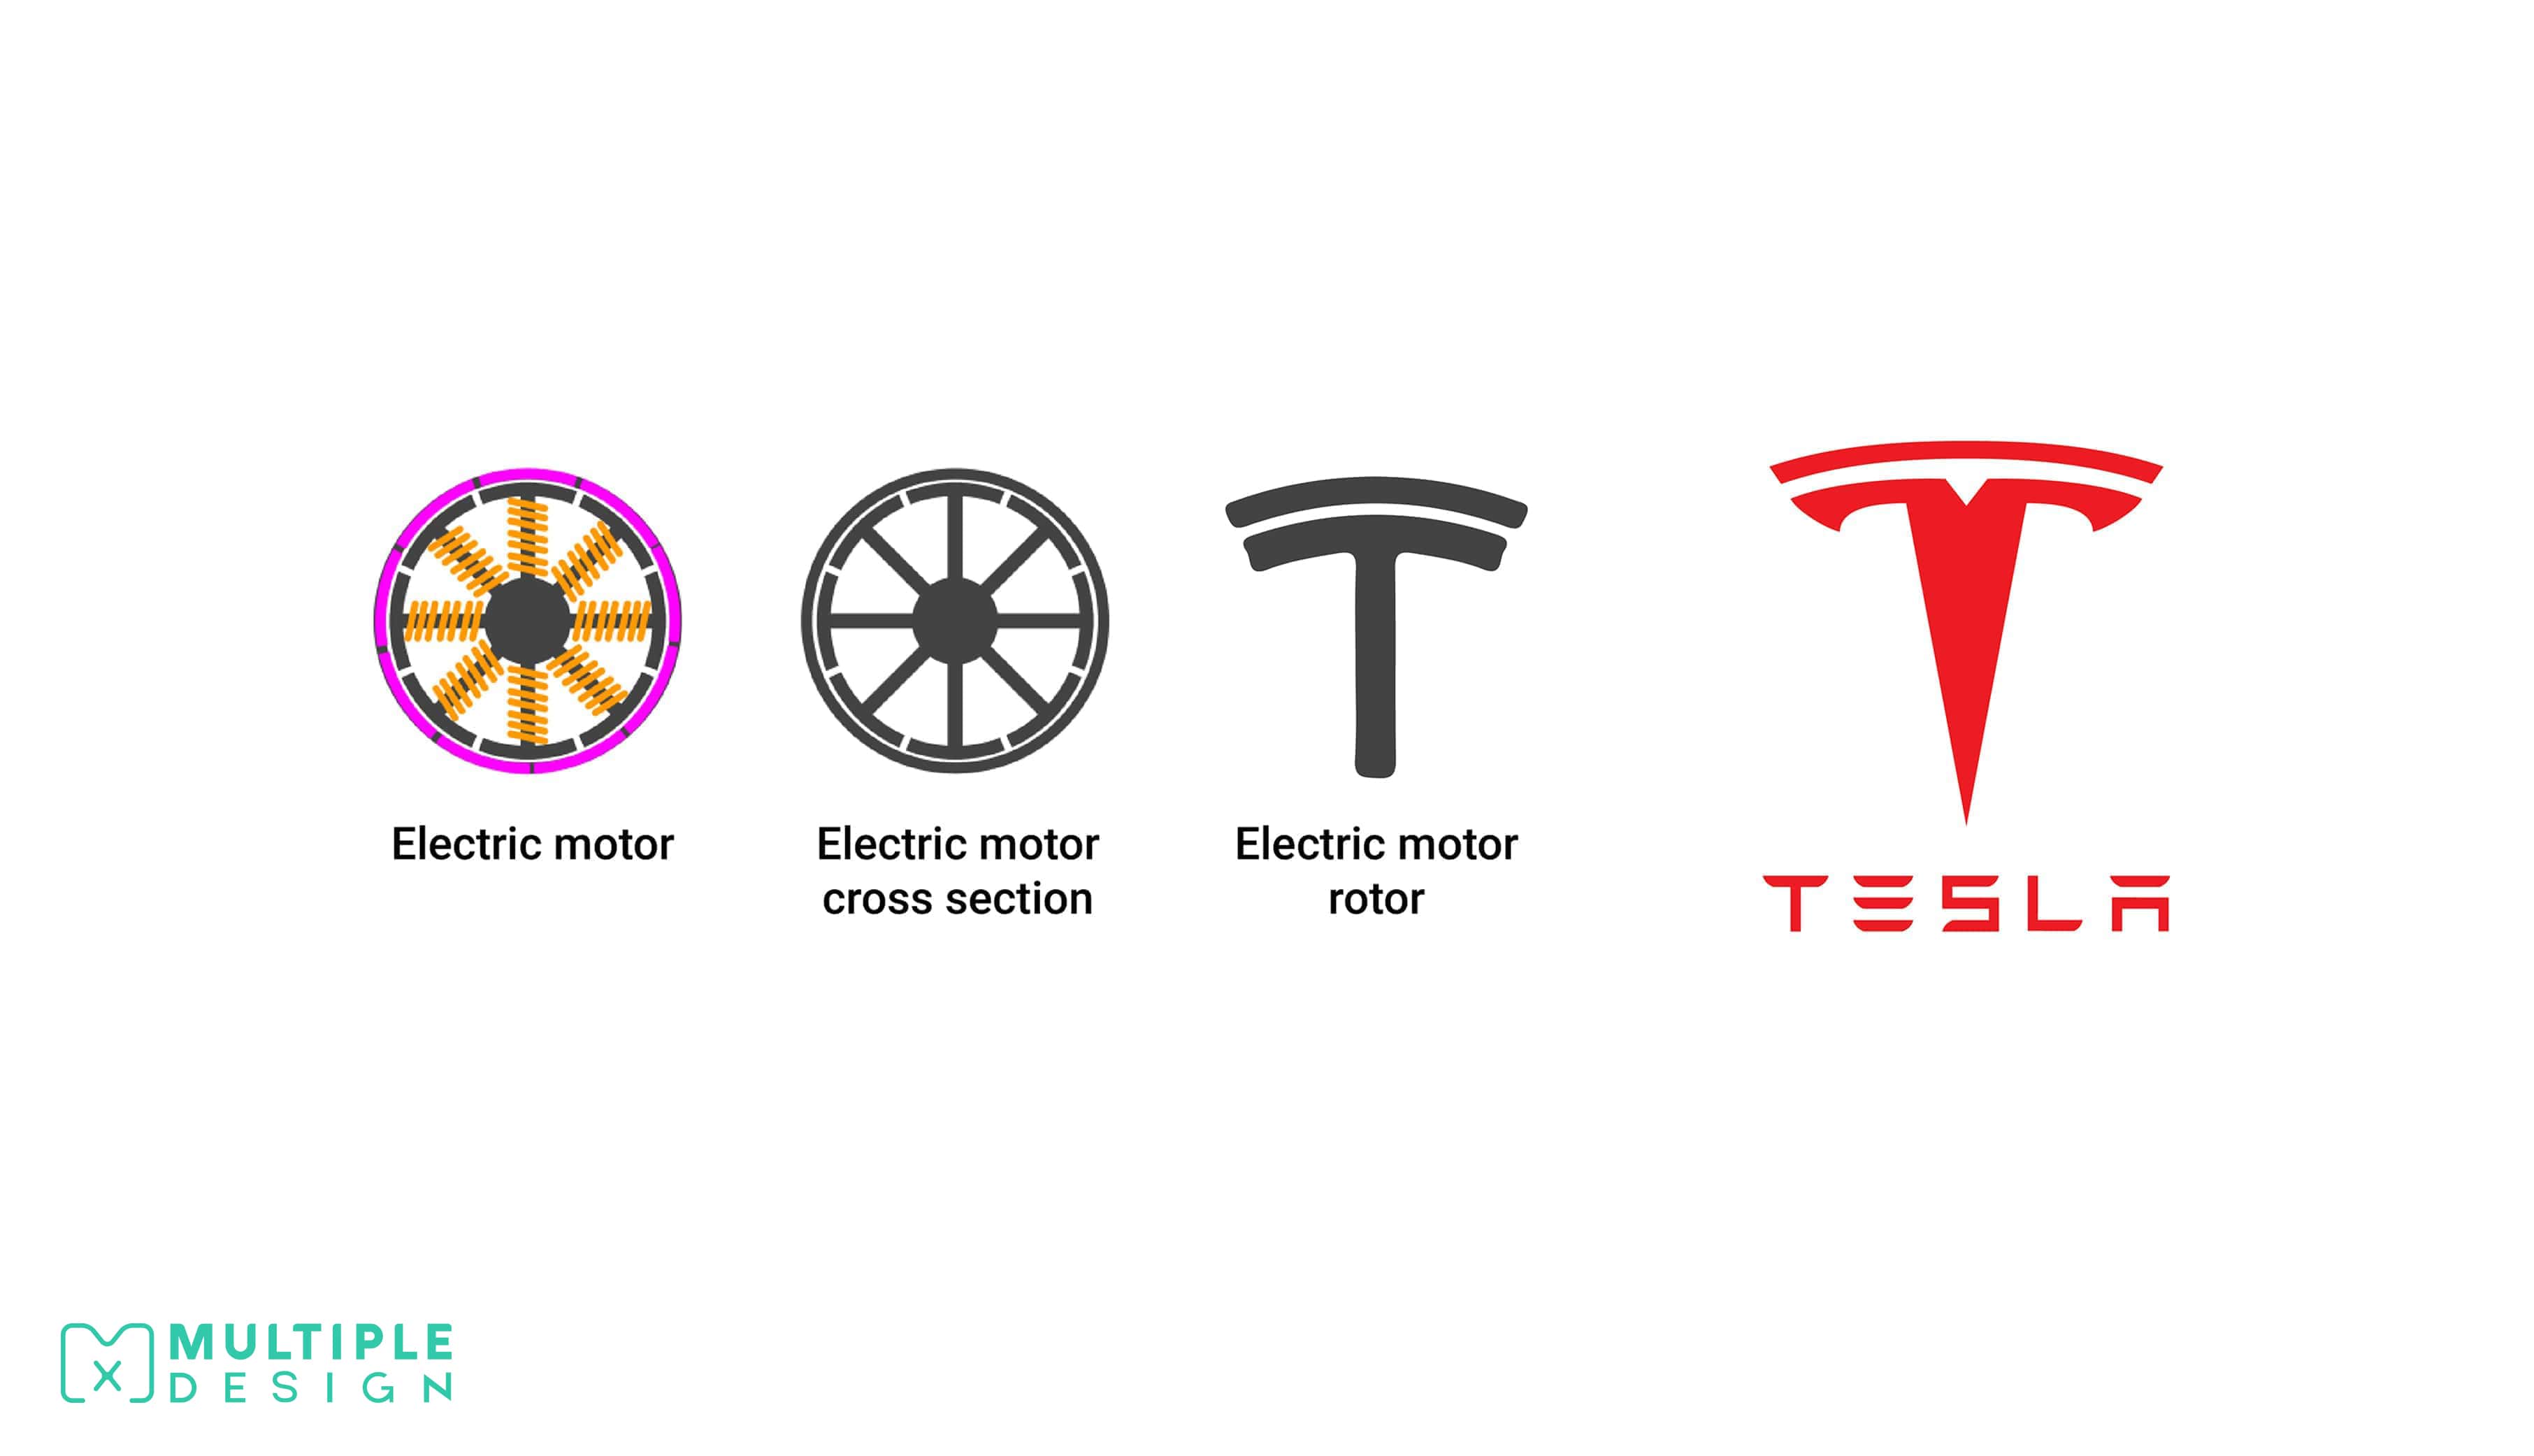 tesla logo, electric motor cross section